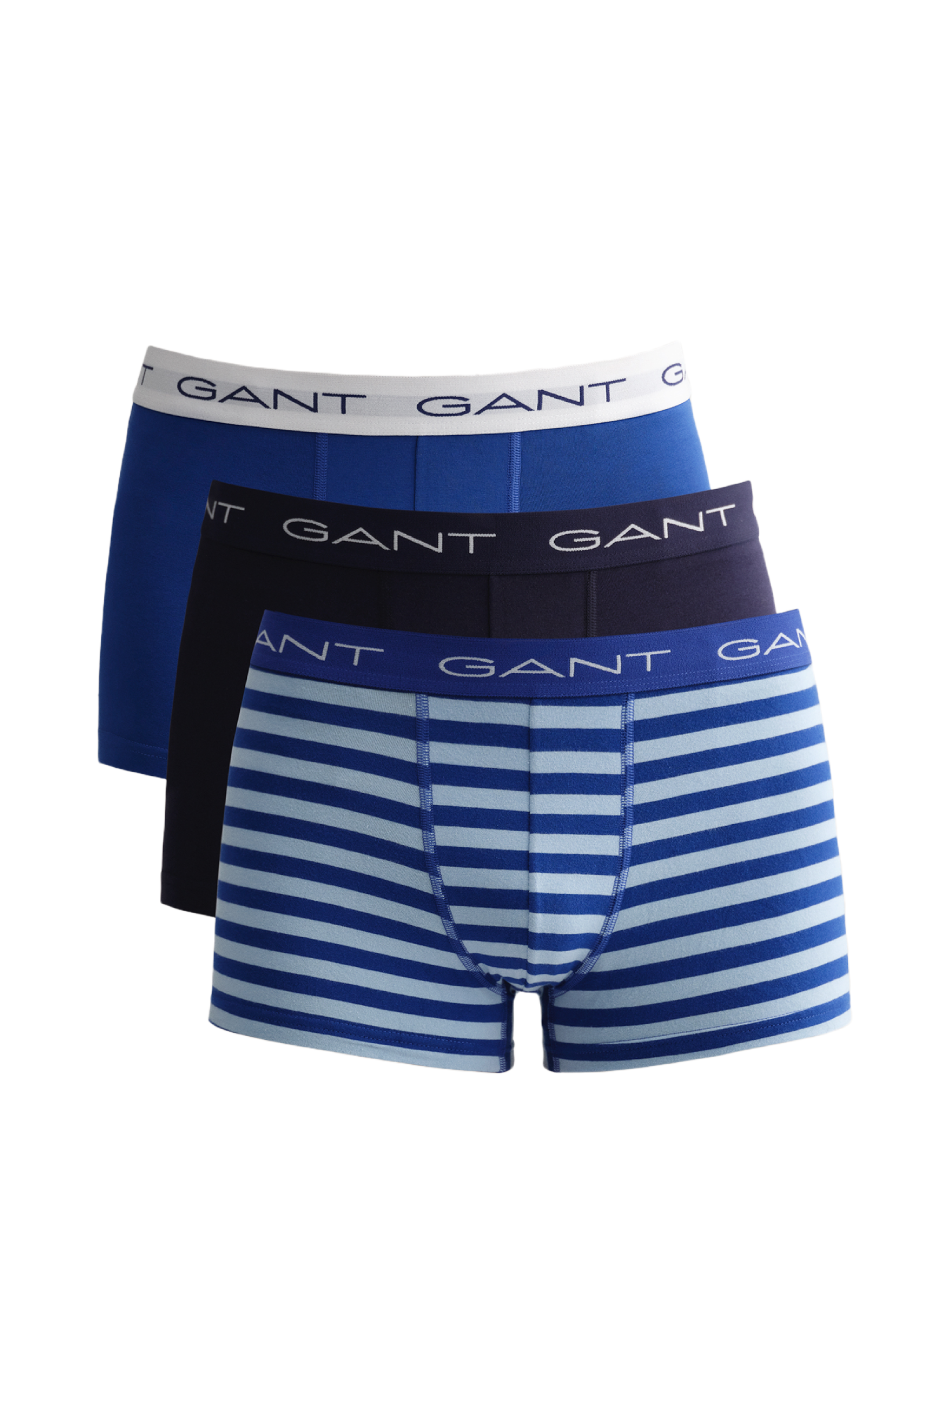 Gant Yarn Dyed Stripe Men's Trunk 3 Pack